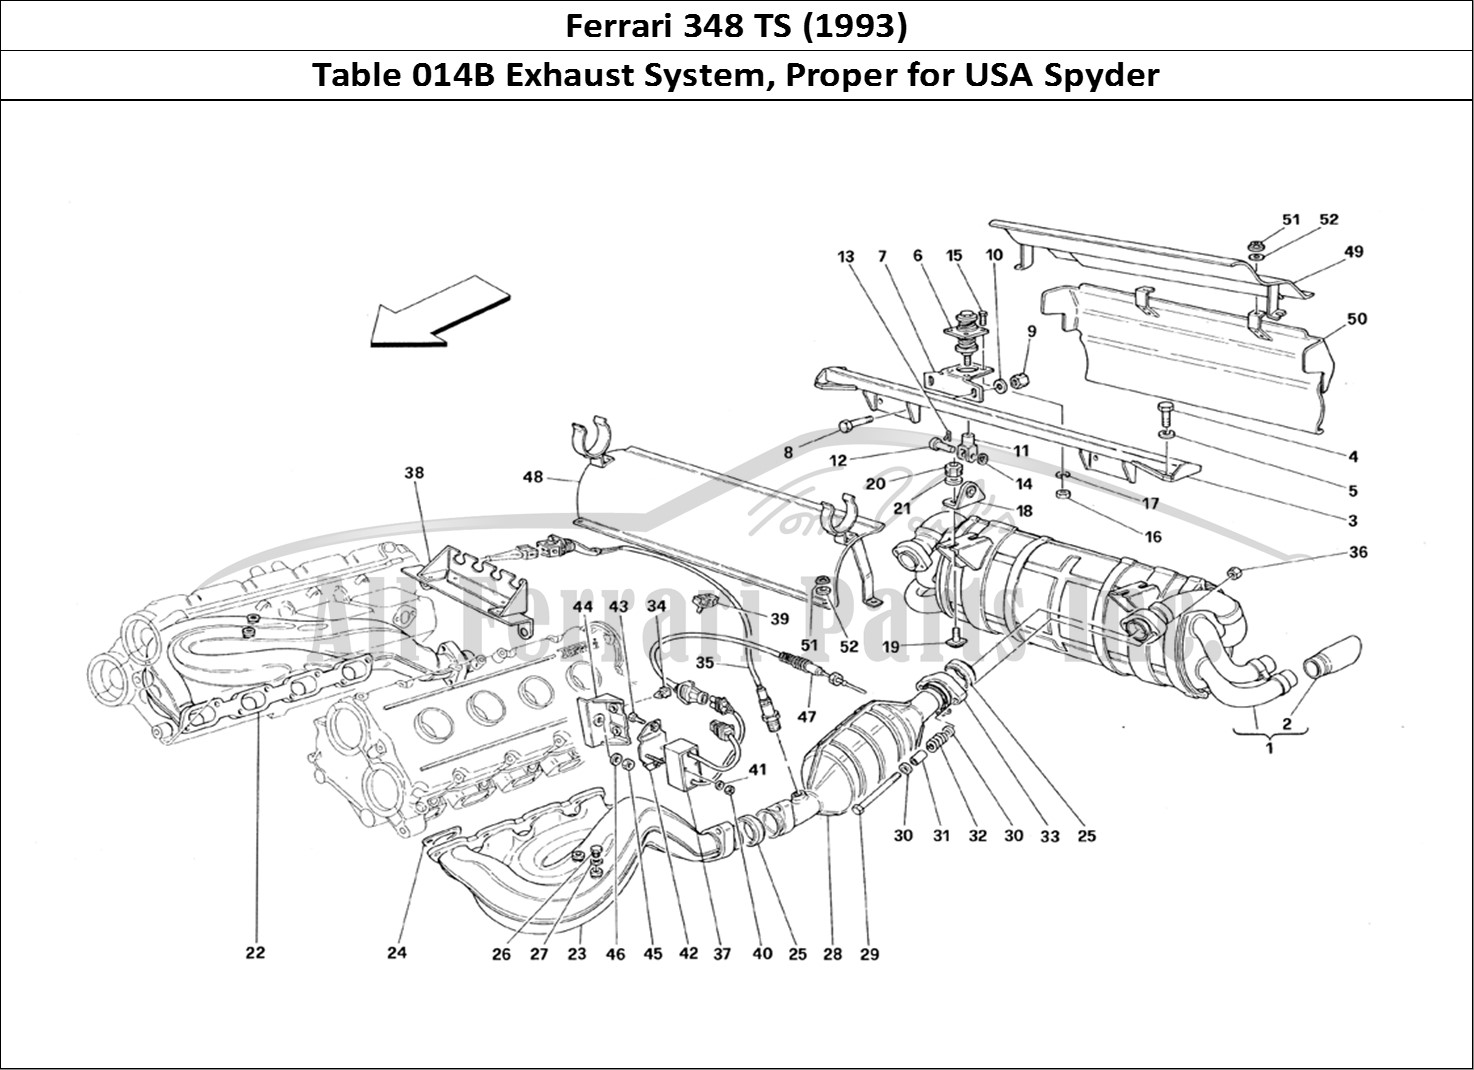 Ferrari Parts Ferrari 348 TB (1993) Page 014 Exhaust System - Valid fo